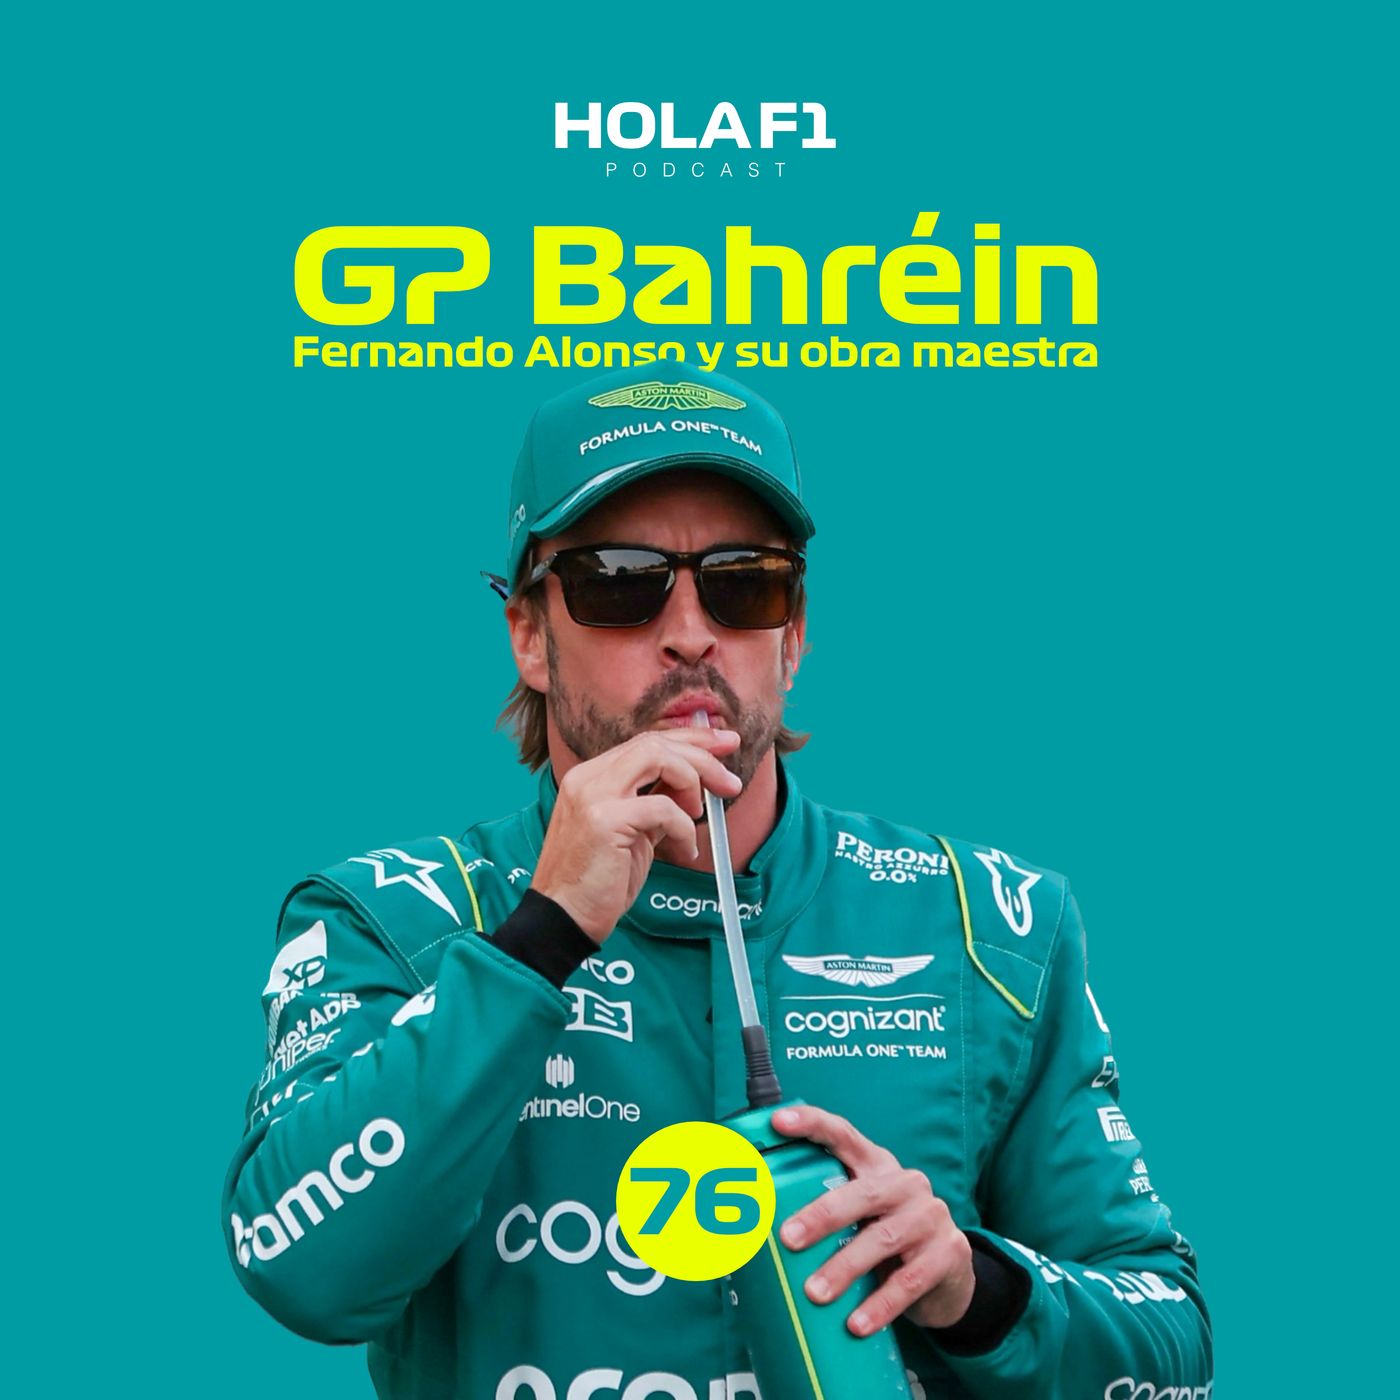 GP Bahréin: Fernando Alonso y su obra maestra "Let's go"...